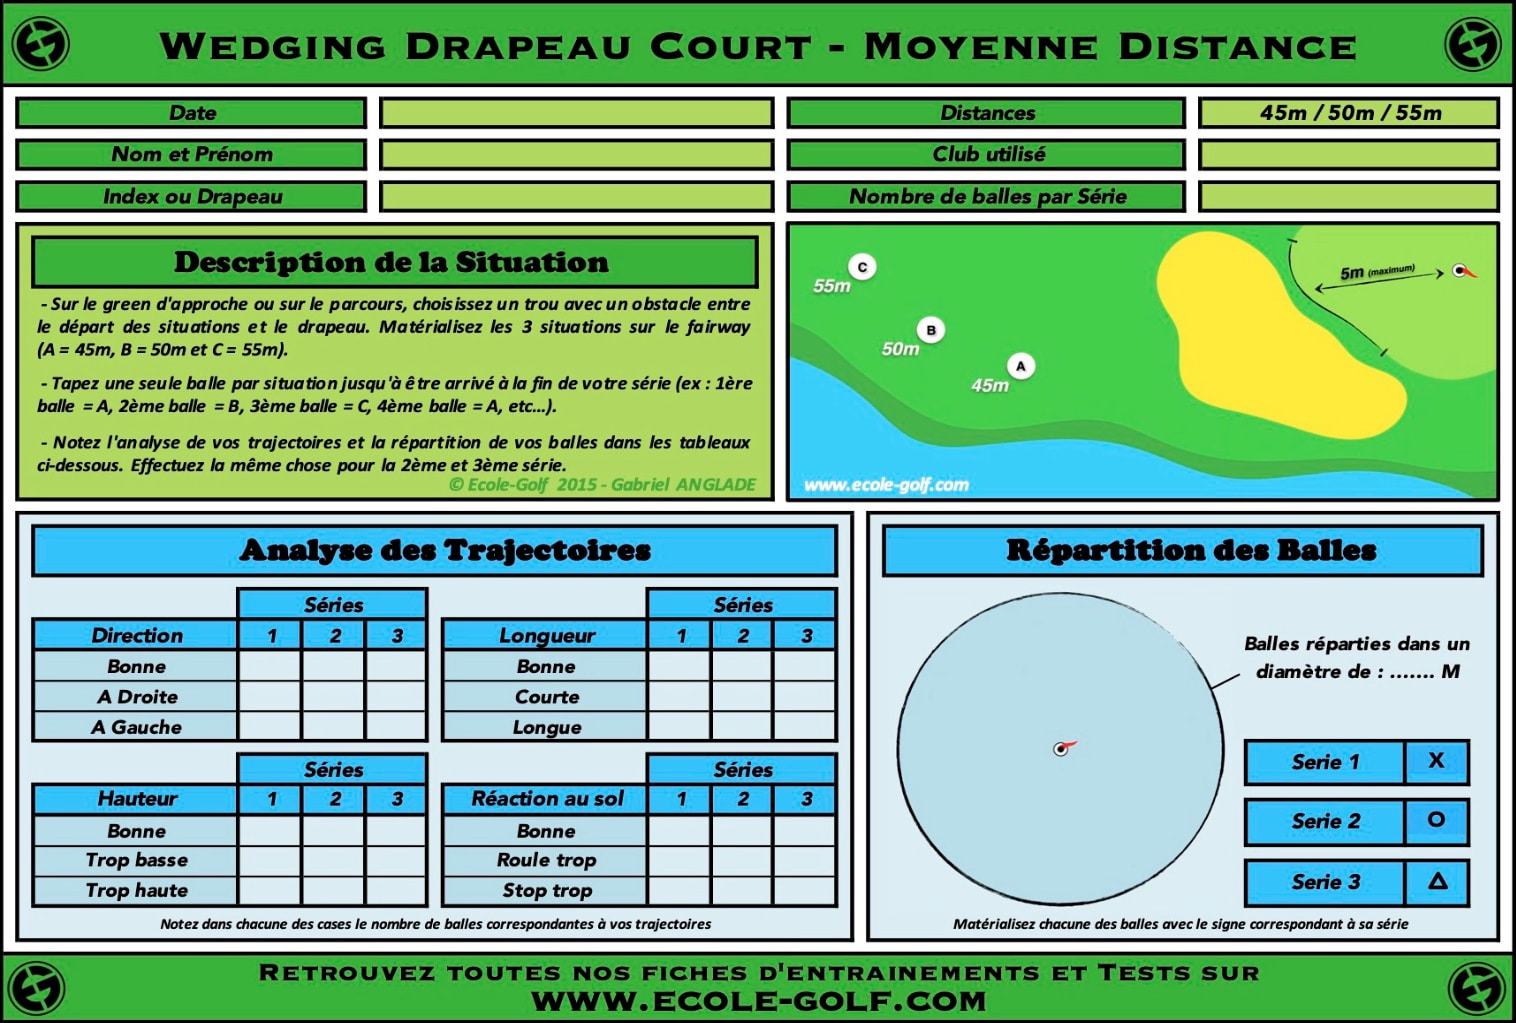 Wedging Drapeau Court - Moyenne Distance